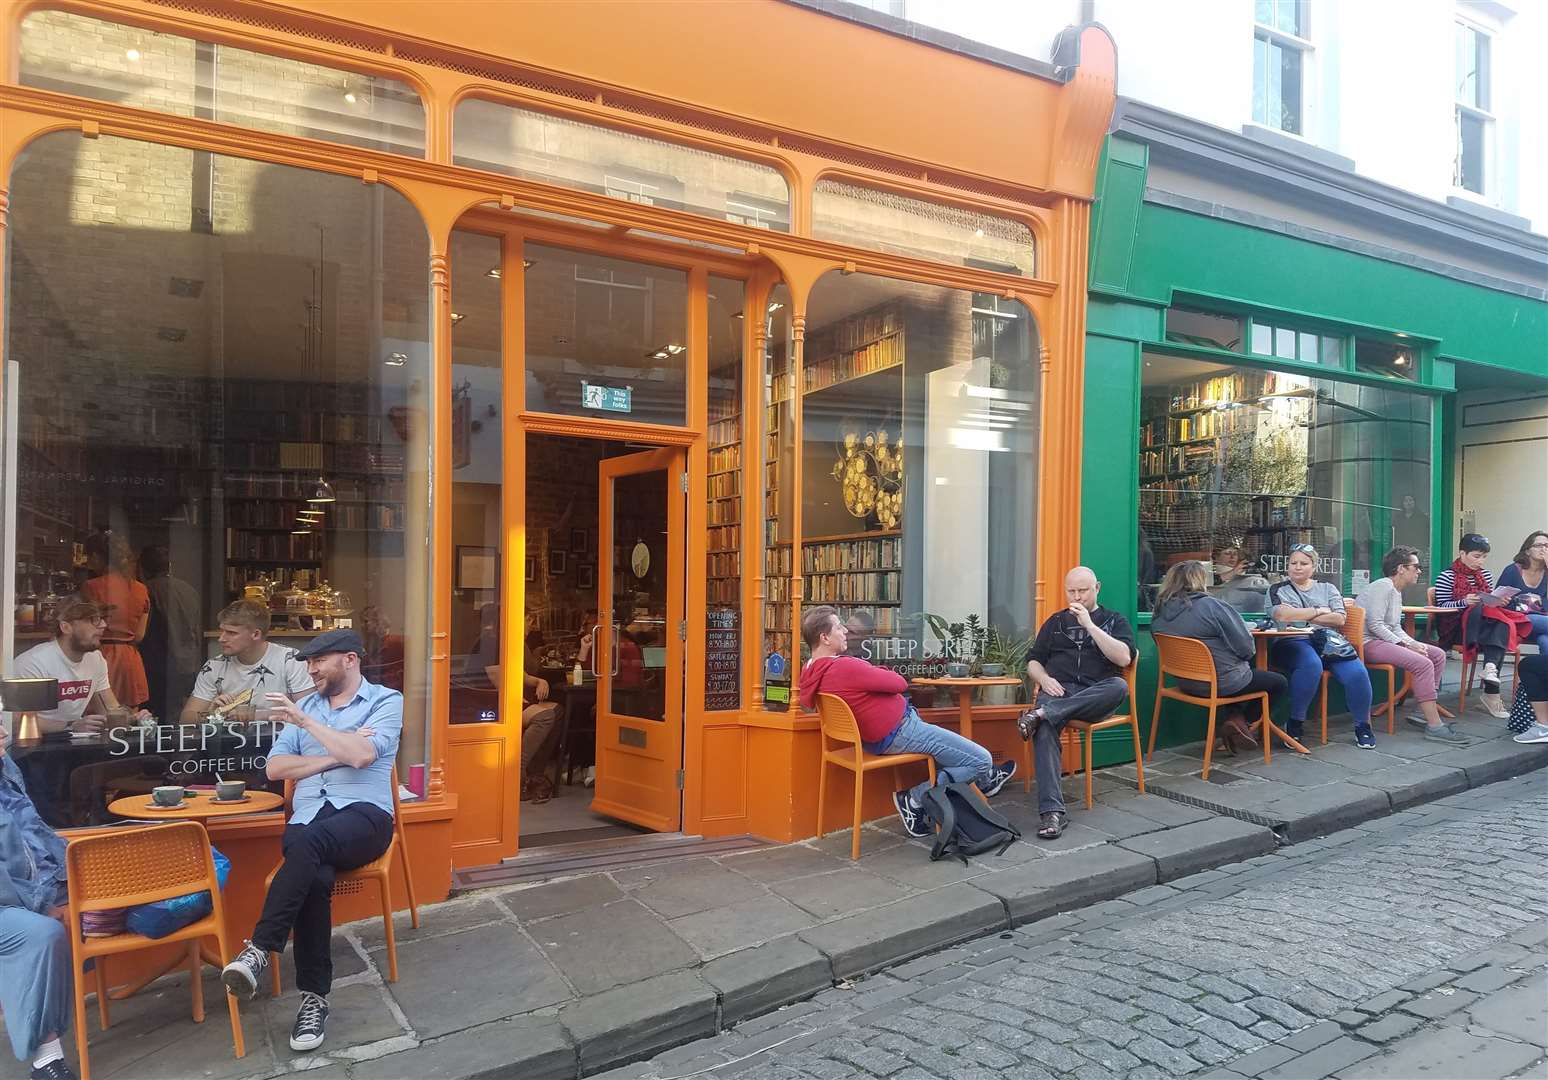 Steep Street Coffee House in Folkestone